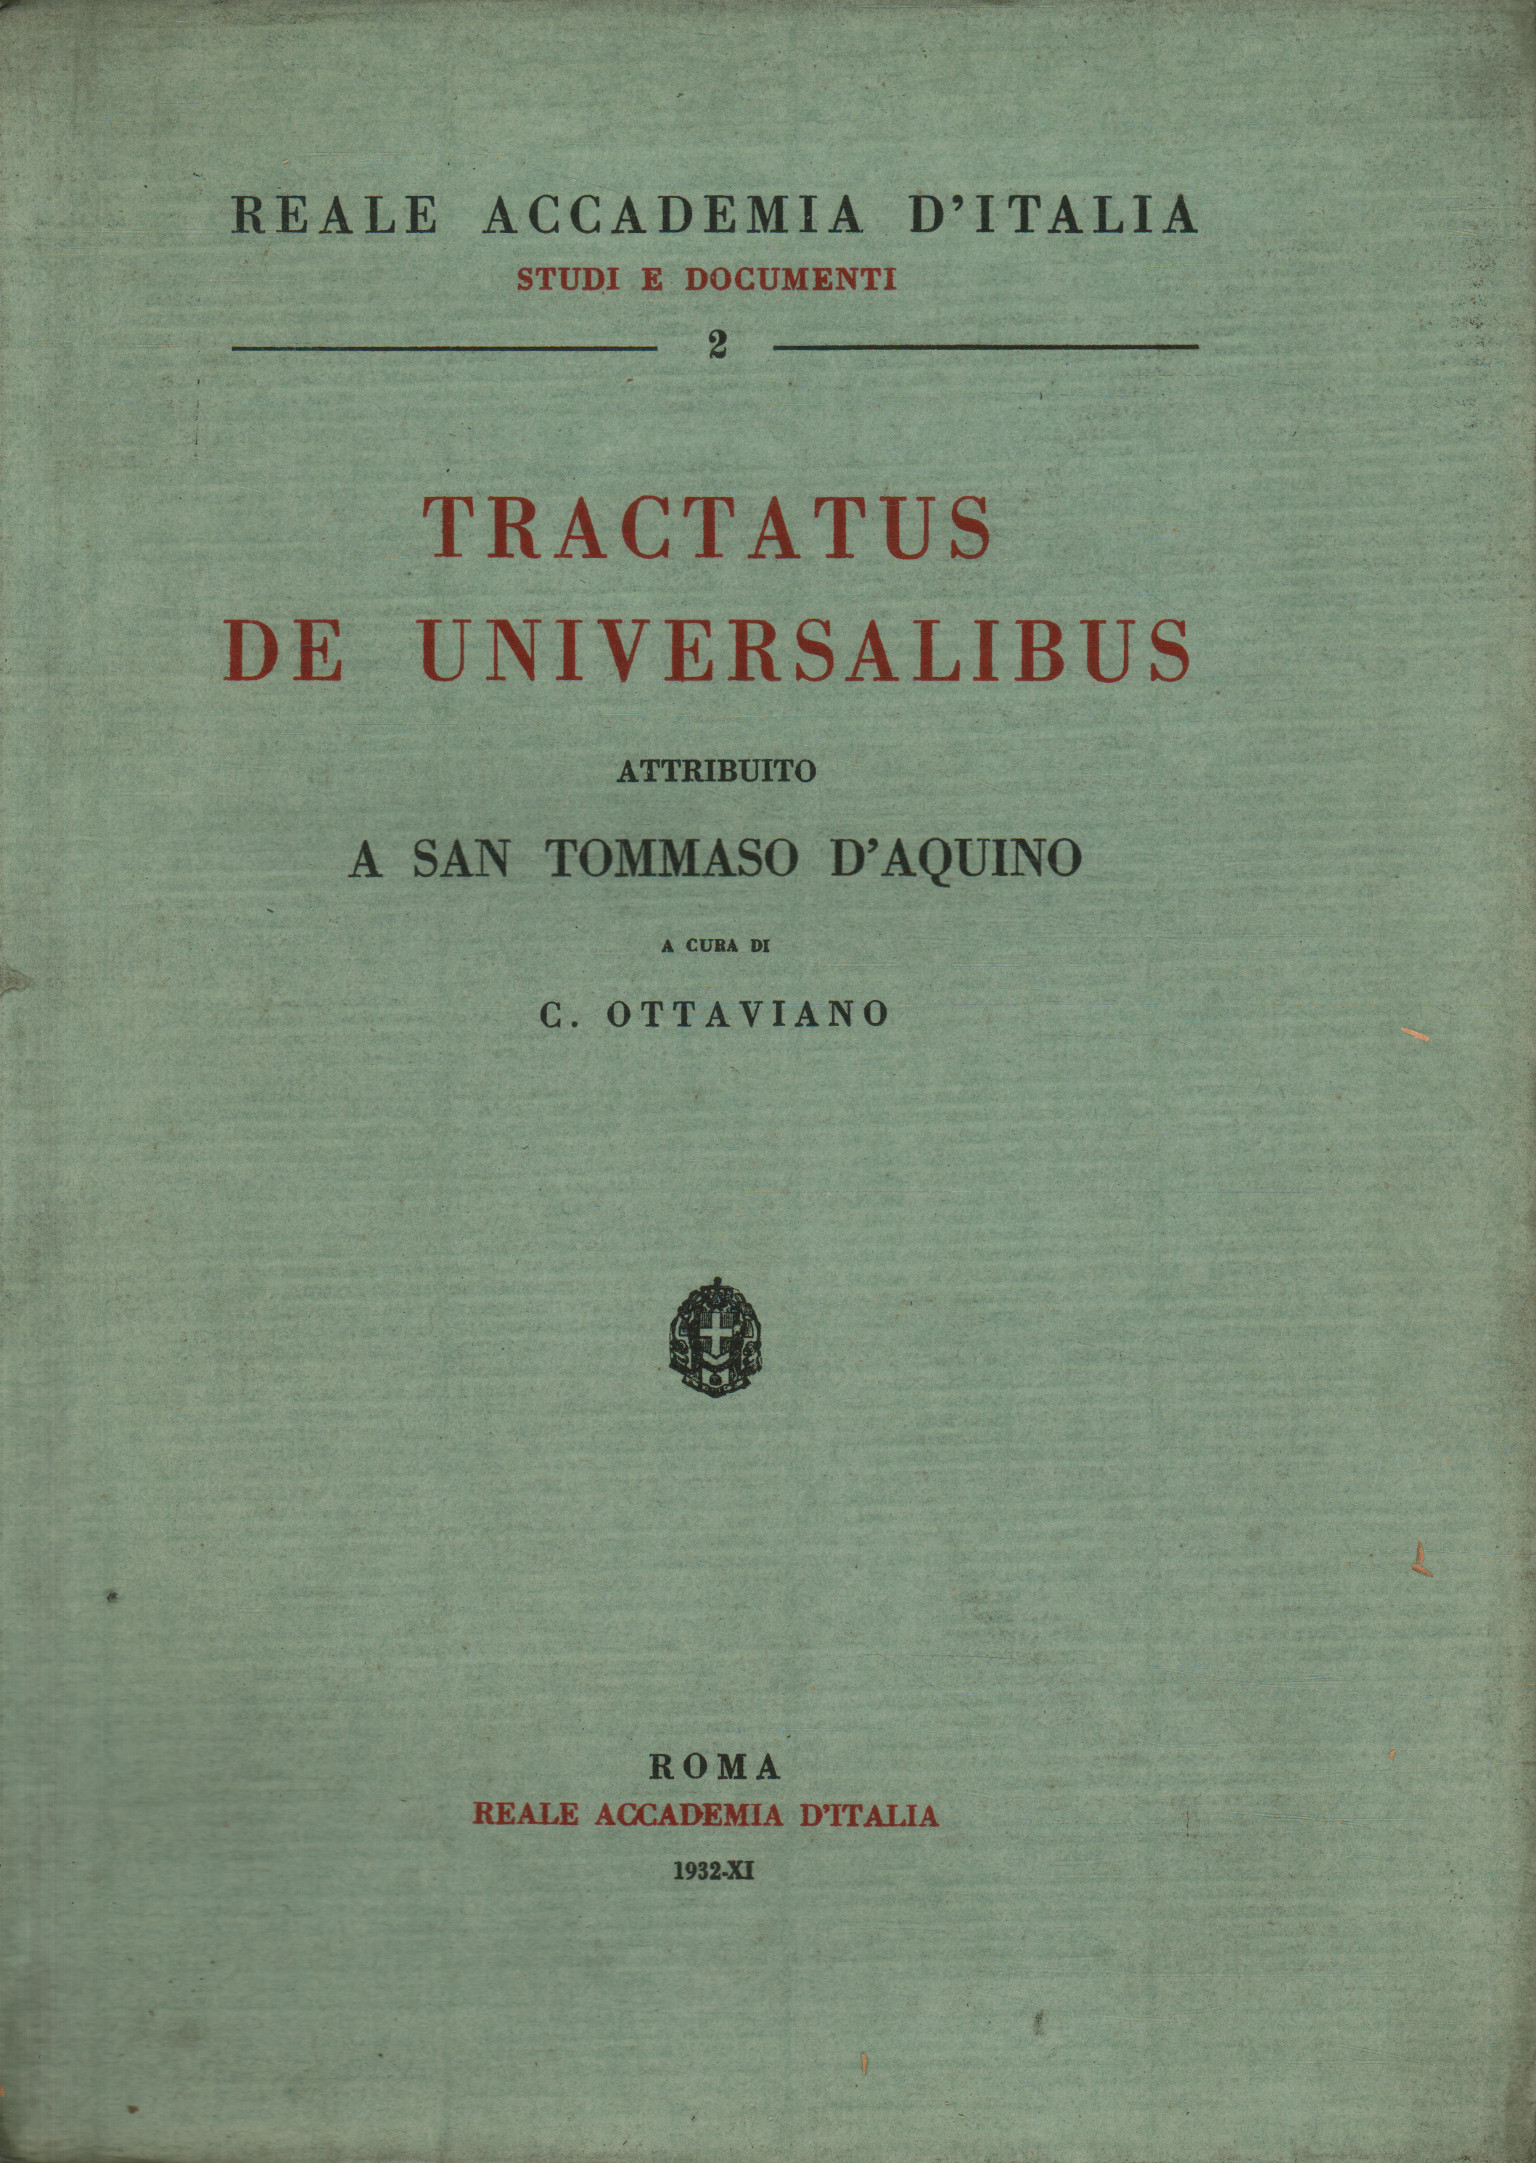 Tractatus de Universalibus attribuito a